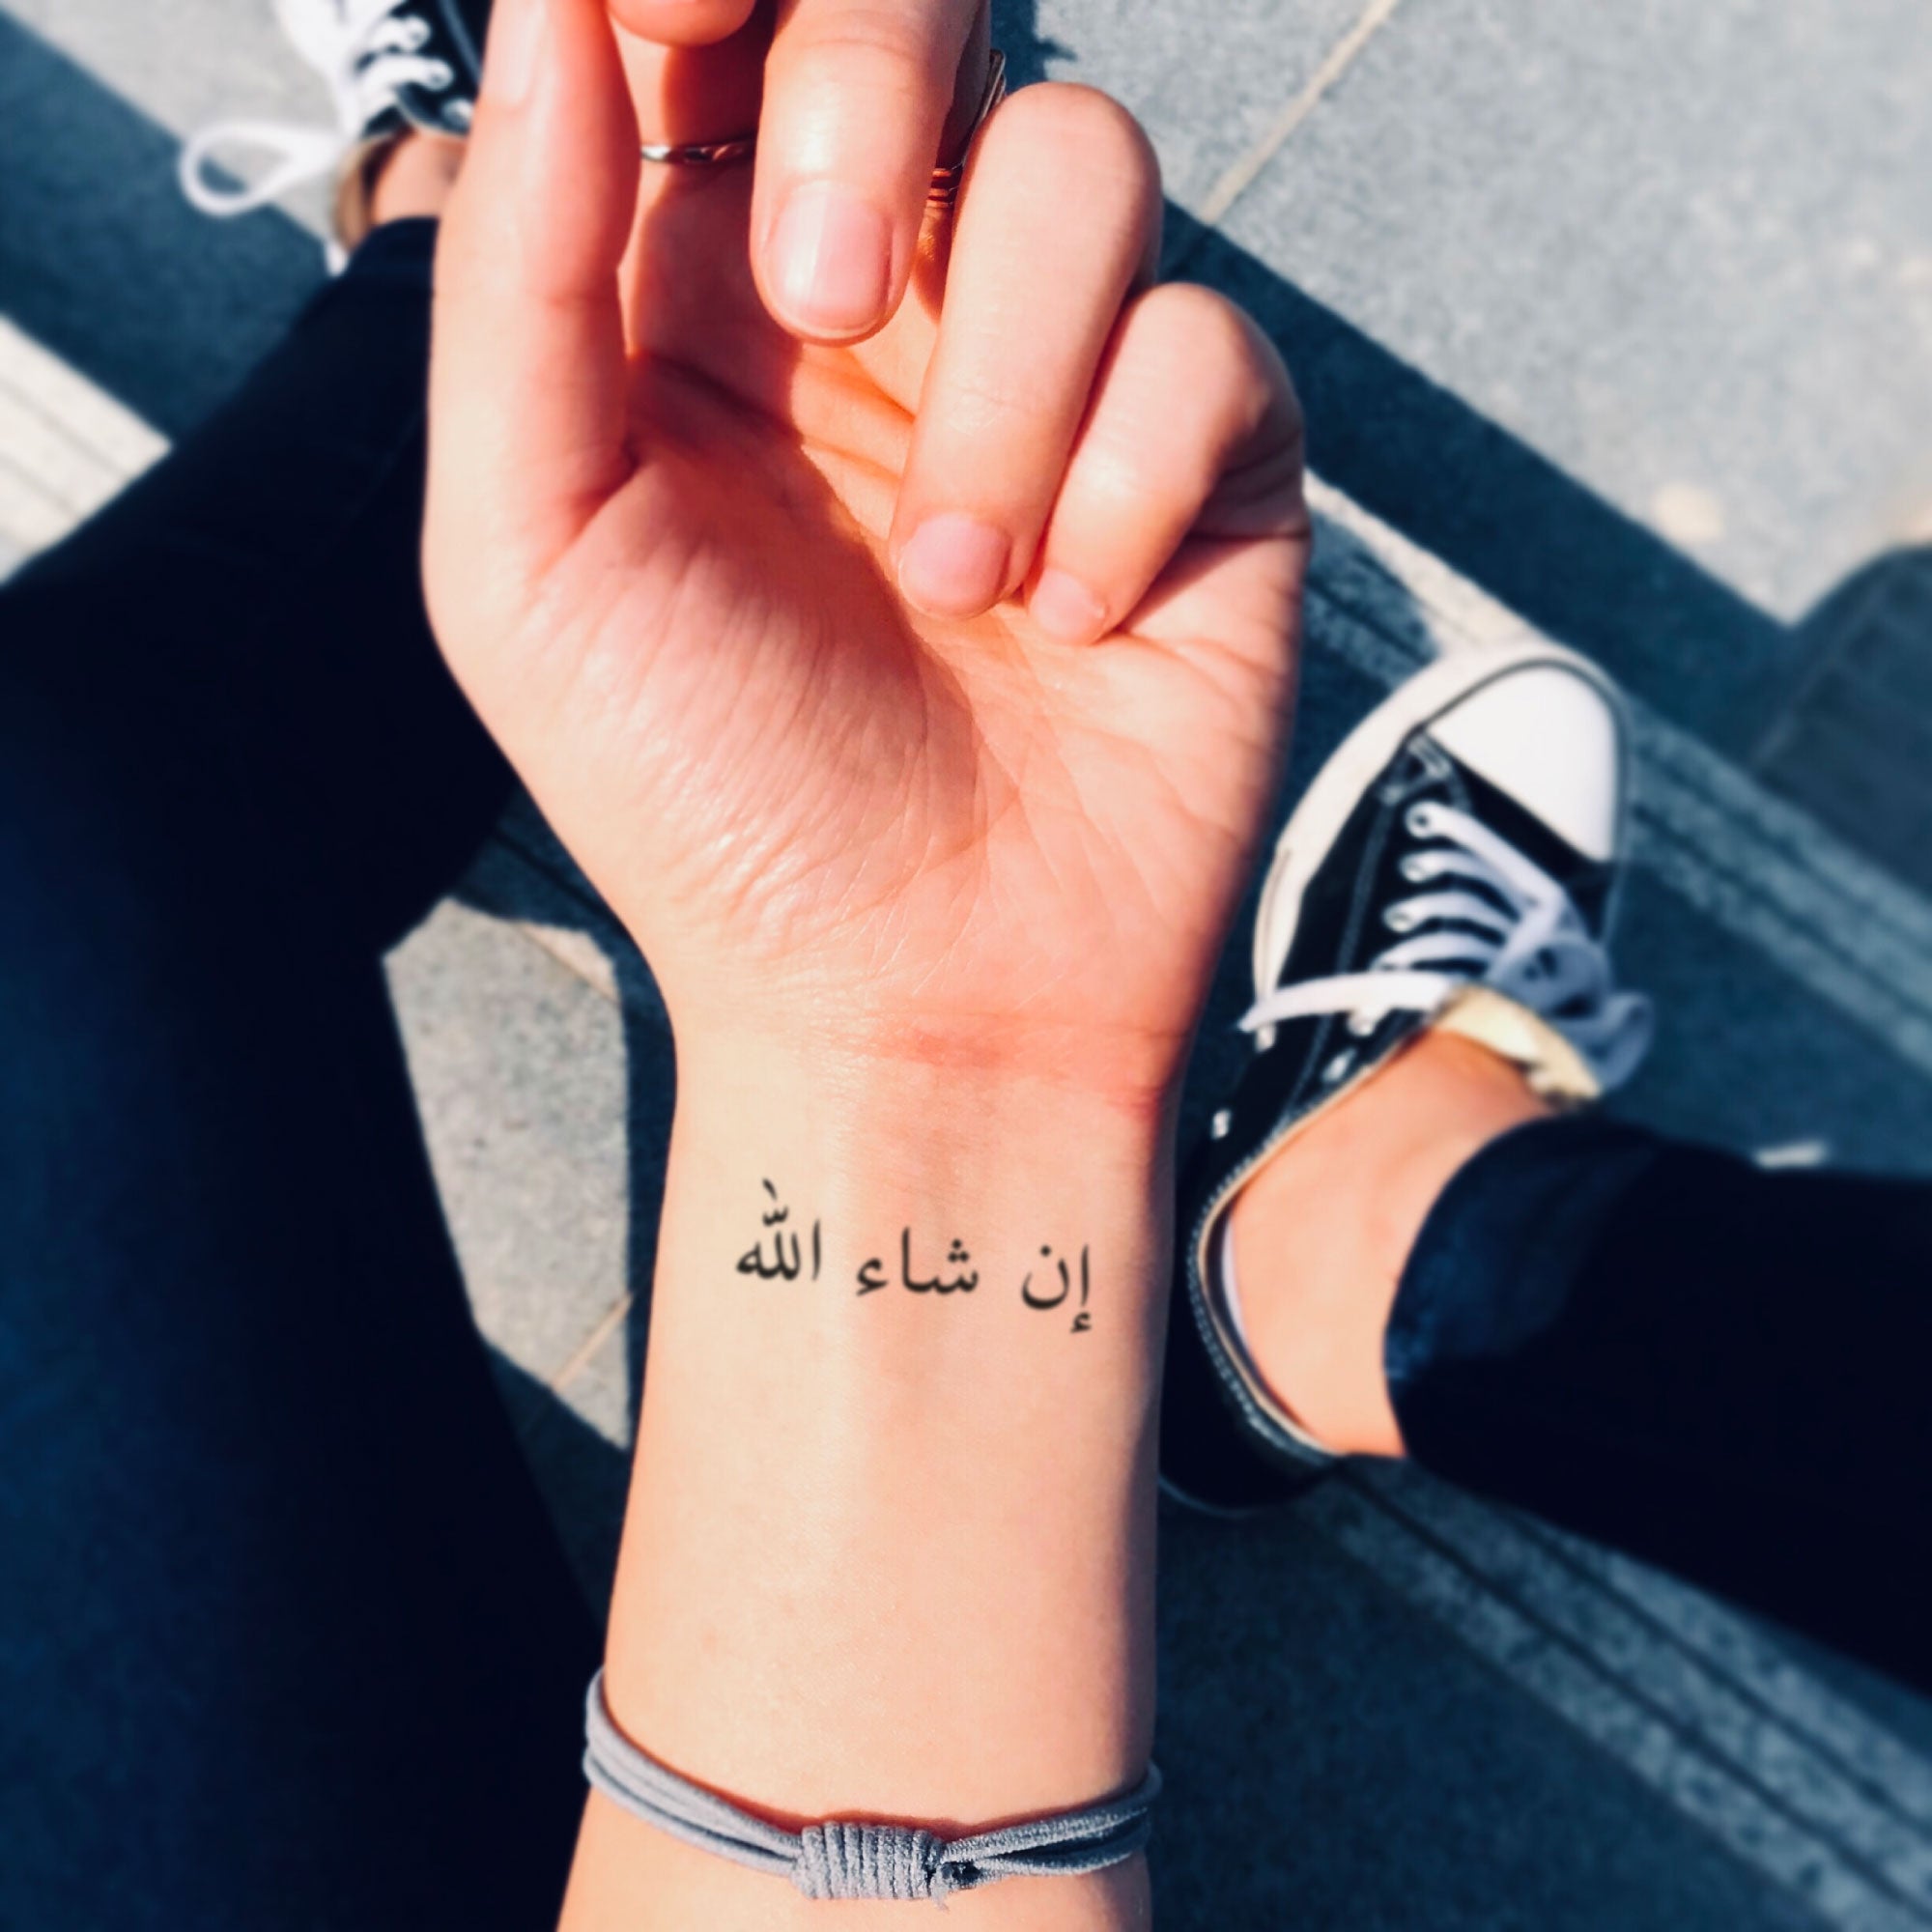 Inshallah - God Willing in Arabic Word Temporary Tattoo Sticker - OhMyTat